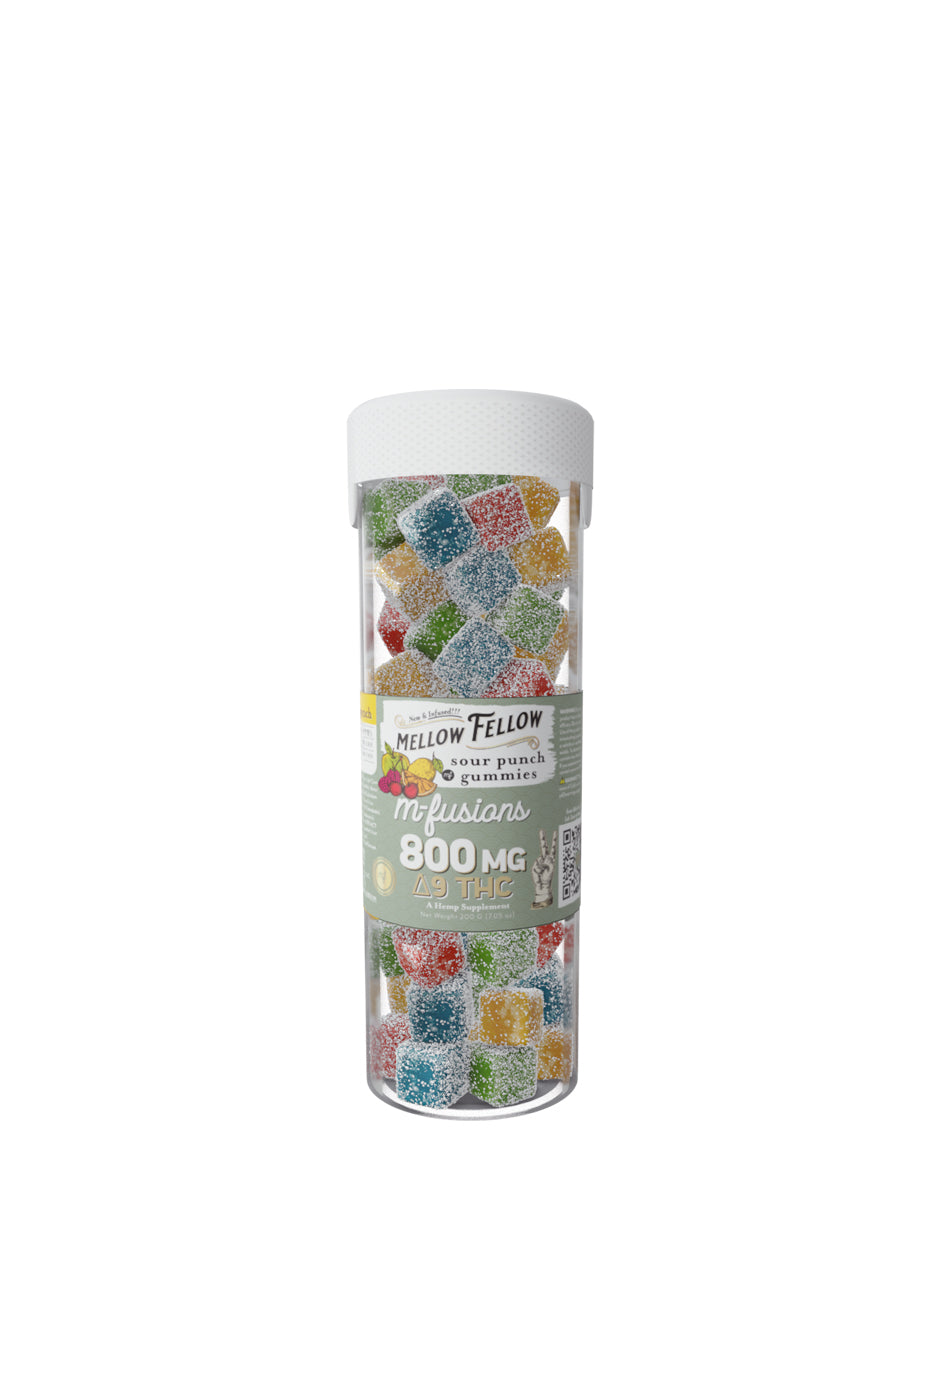 Delta 9 Gummies - Sour Punch Jar